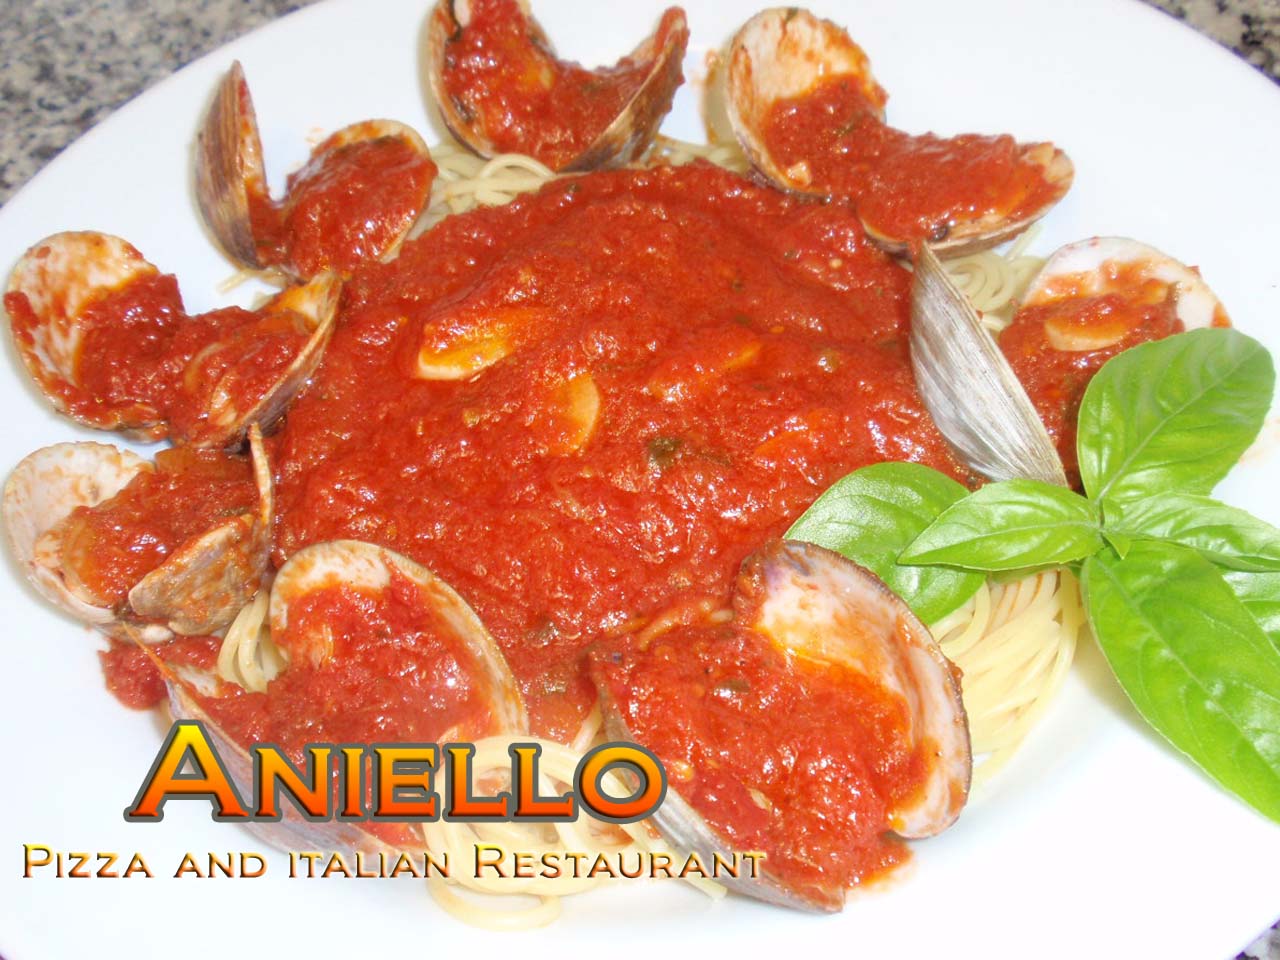 Aniello's Linguini with clams